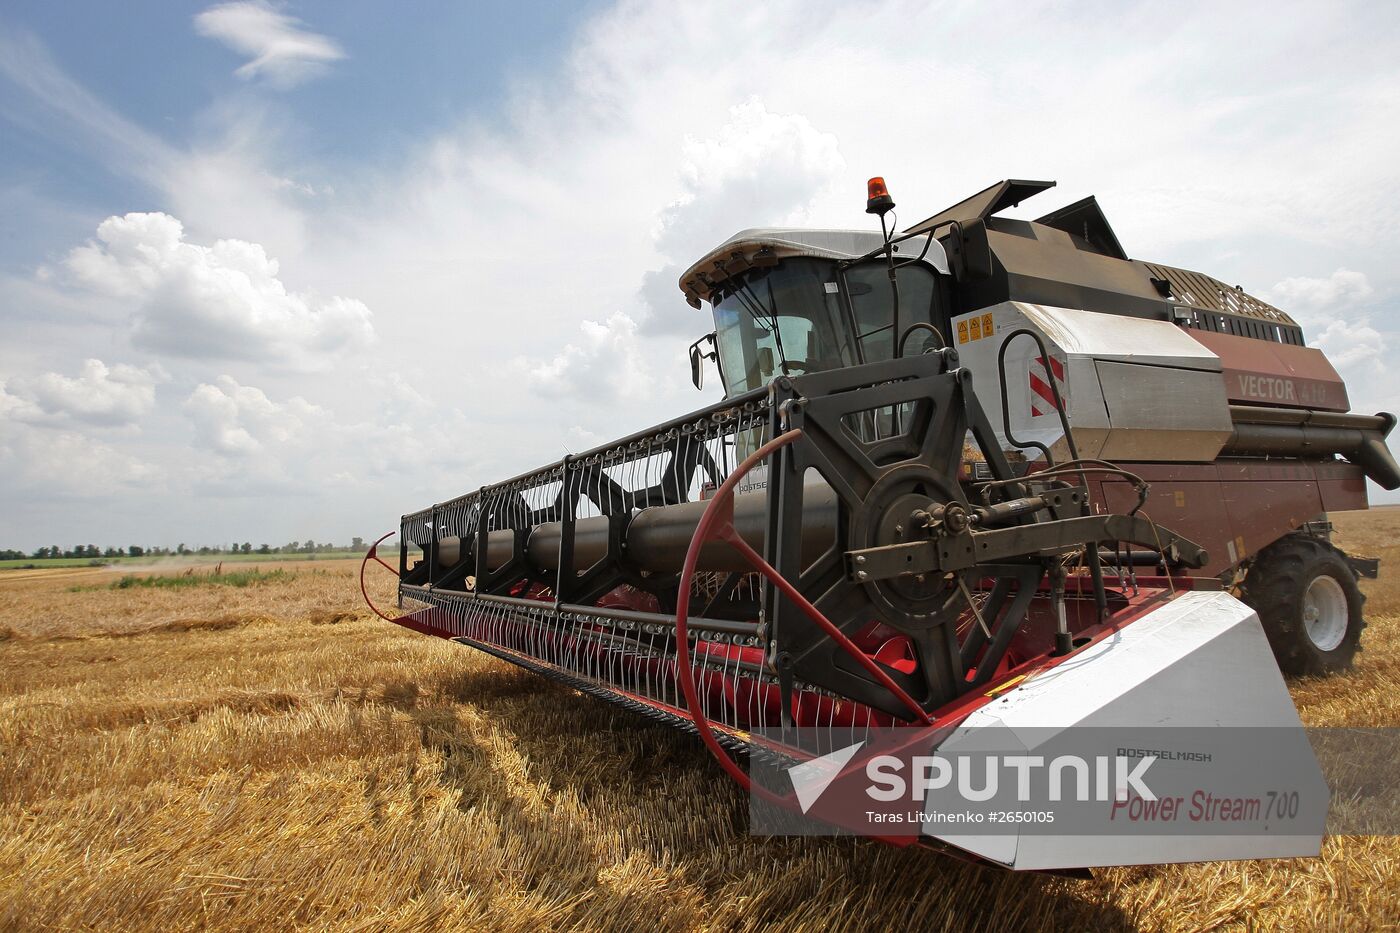 Harvesting crops in Crimea